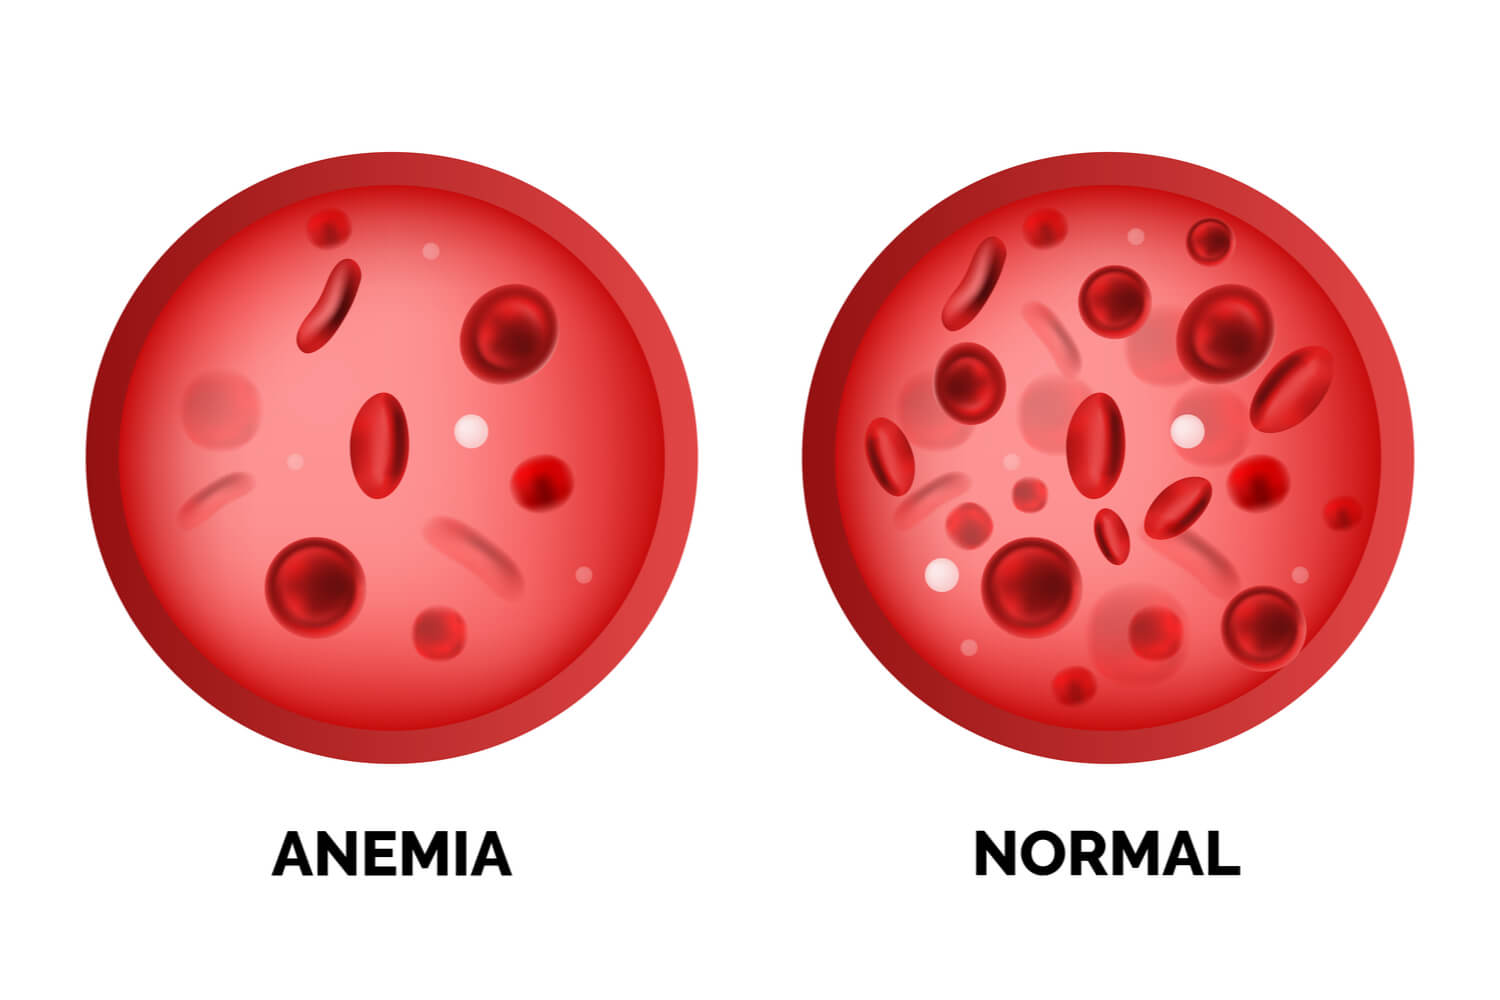 Iron-deficiency Anemia